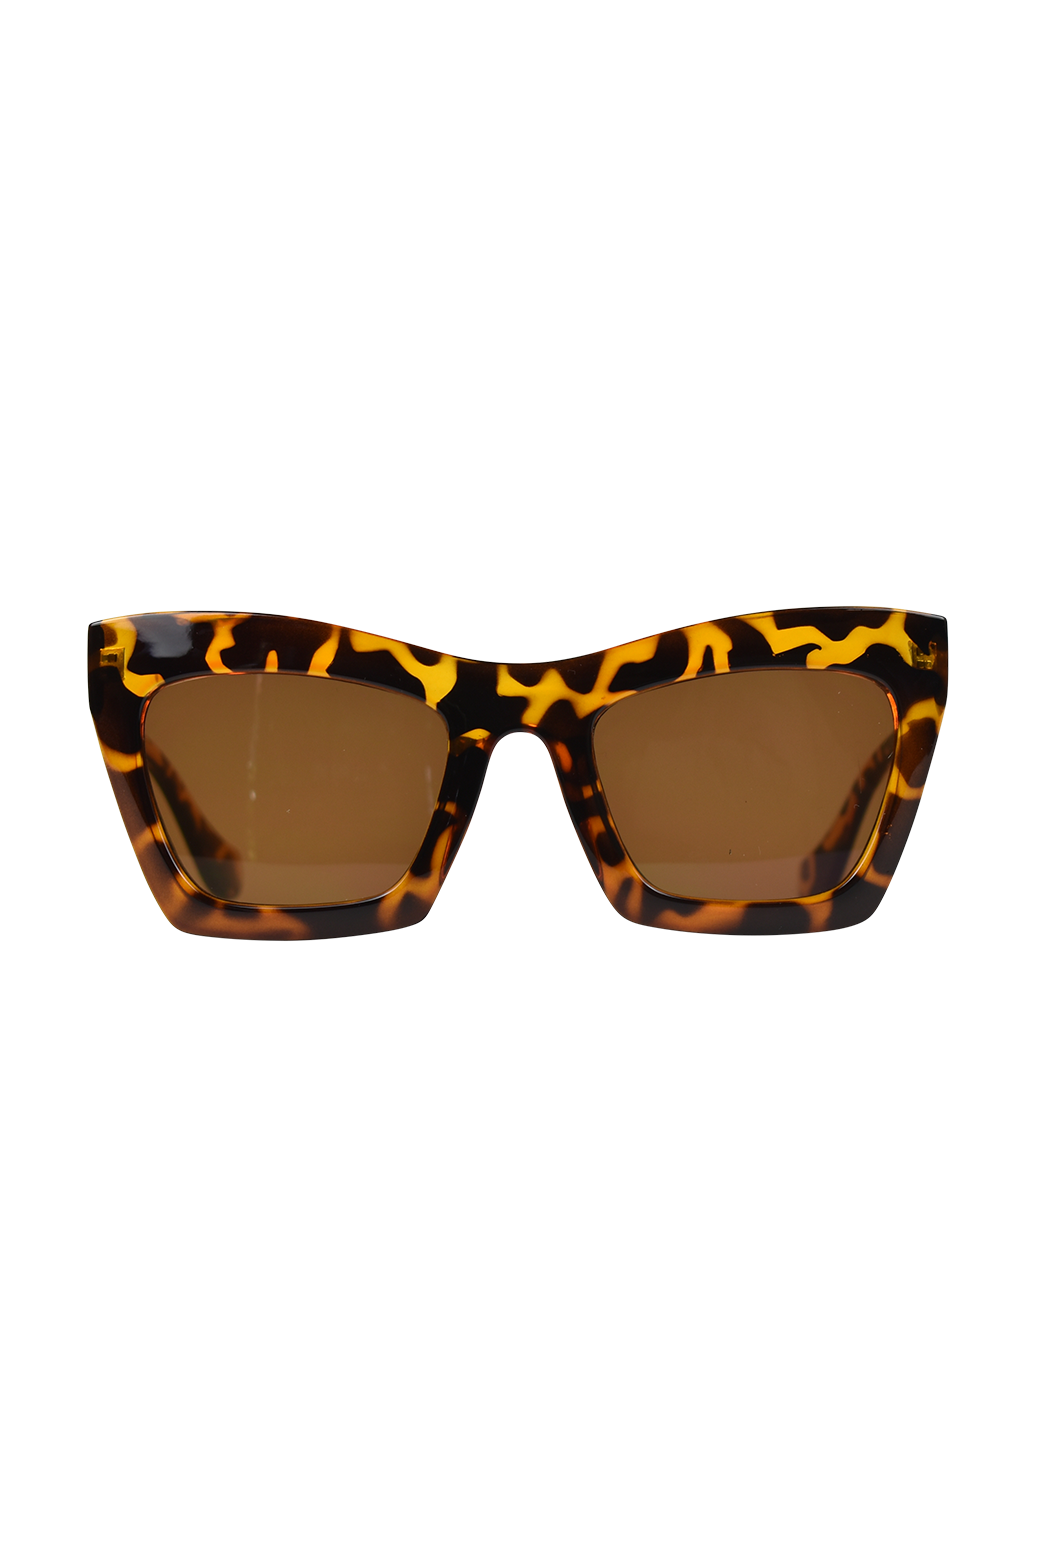 Peta + Jain Jenner Sunglasses Tortoise